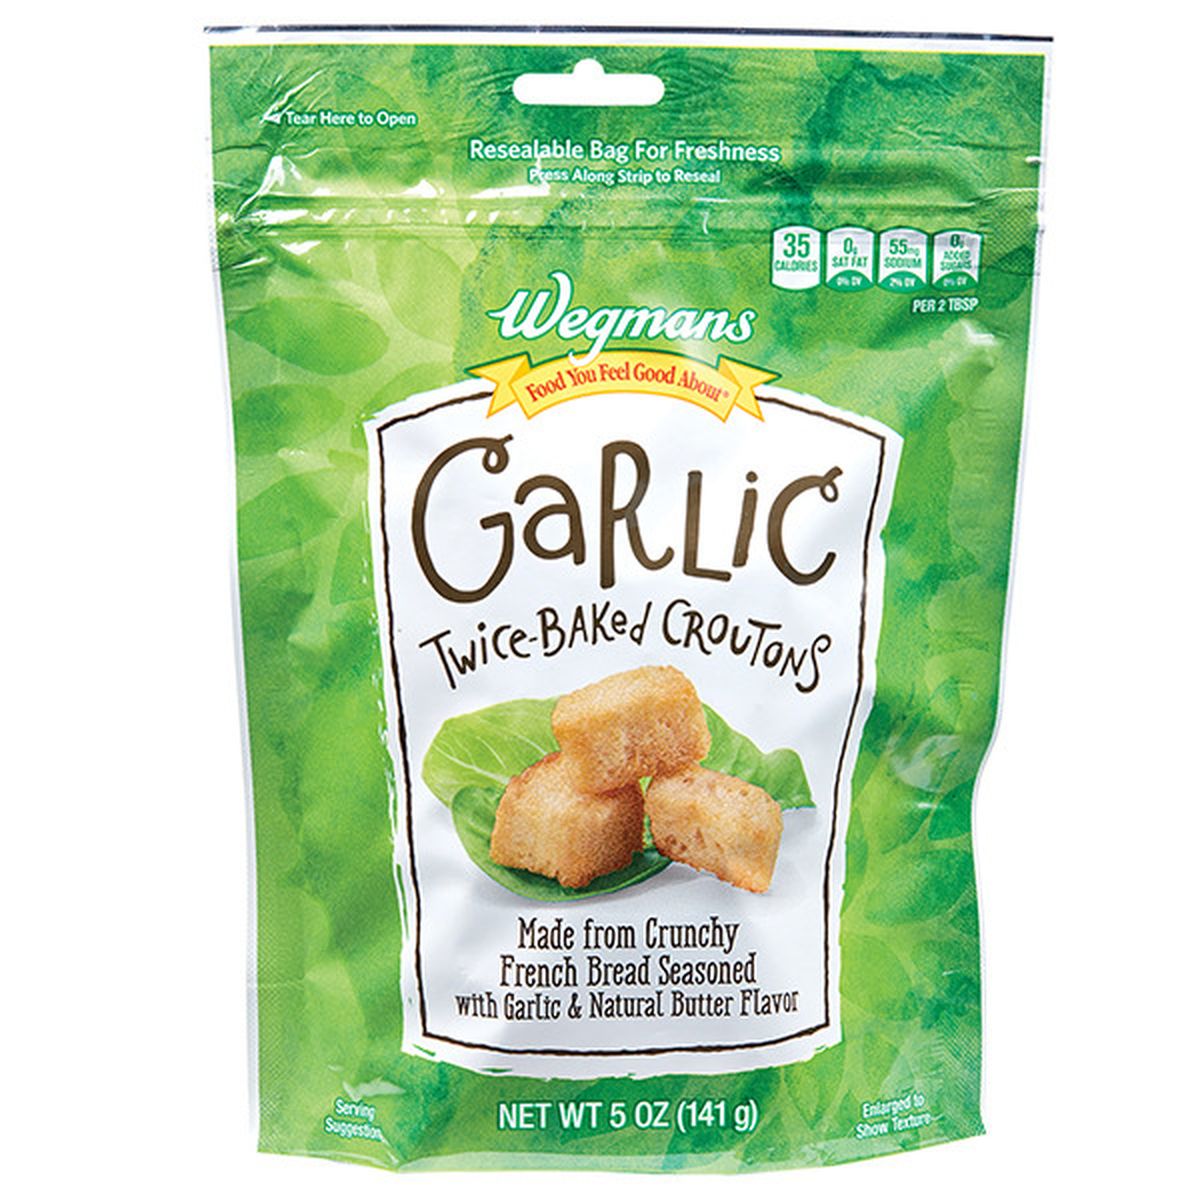 Calories in Wegmans Garlic Twice-Baked Croutons